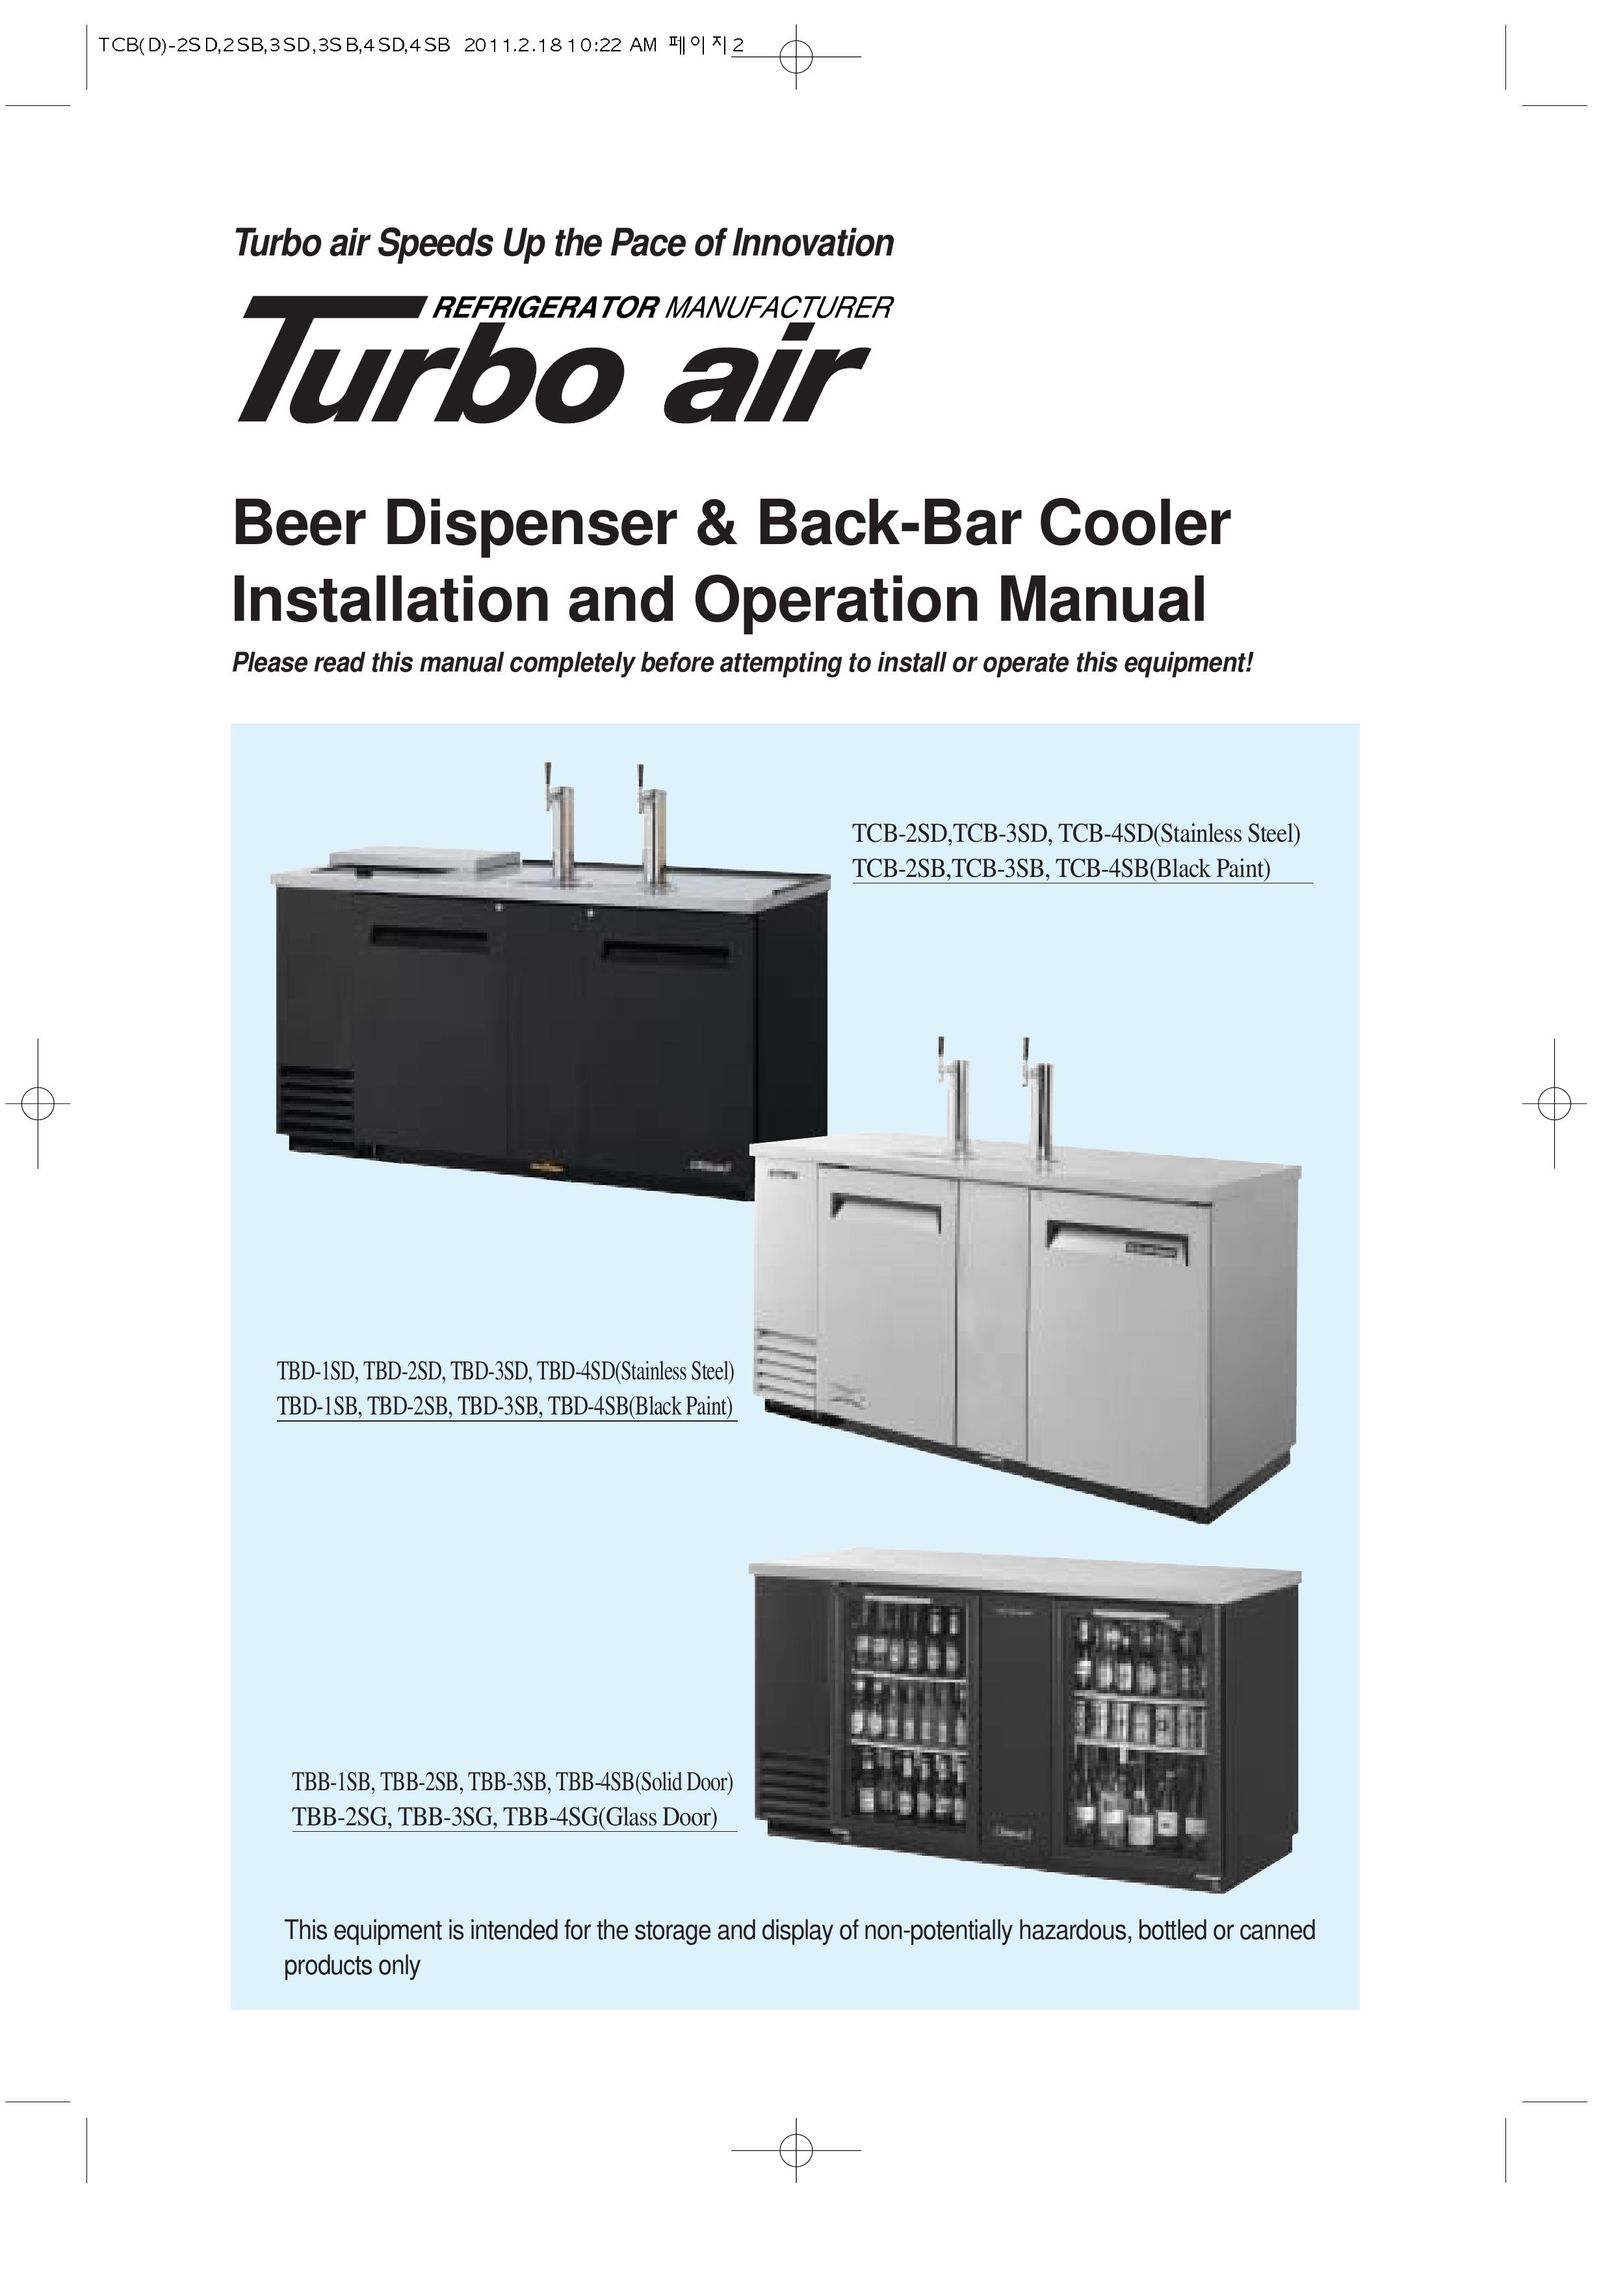 Turbo Air TBD-1SB Beverage Dispenser User Manual